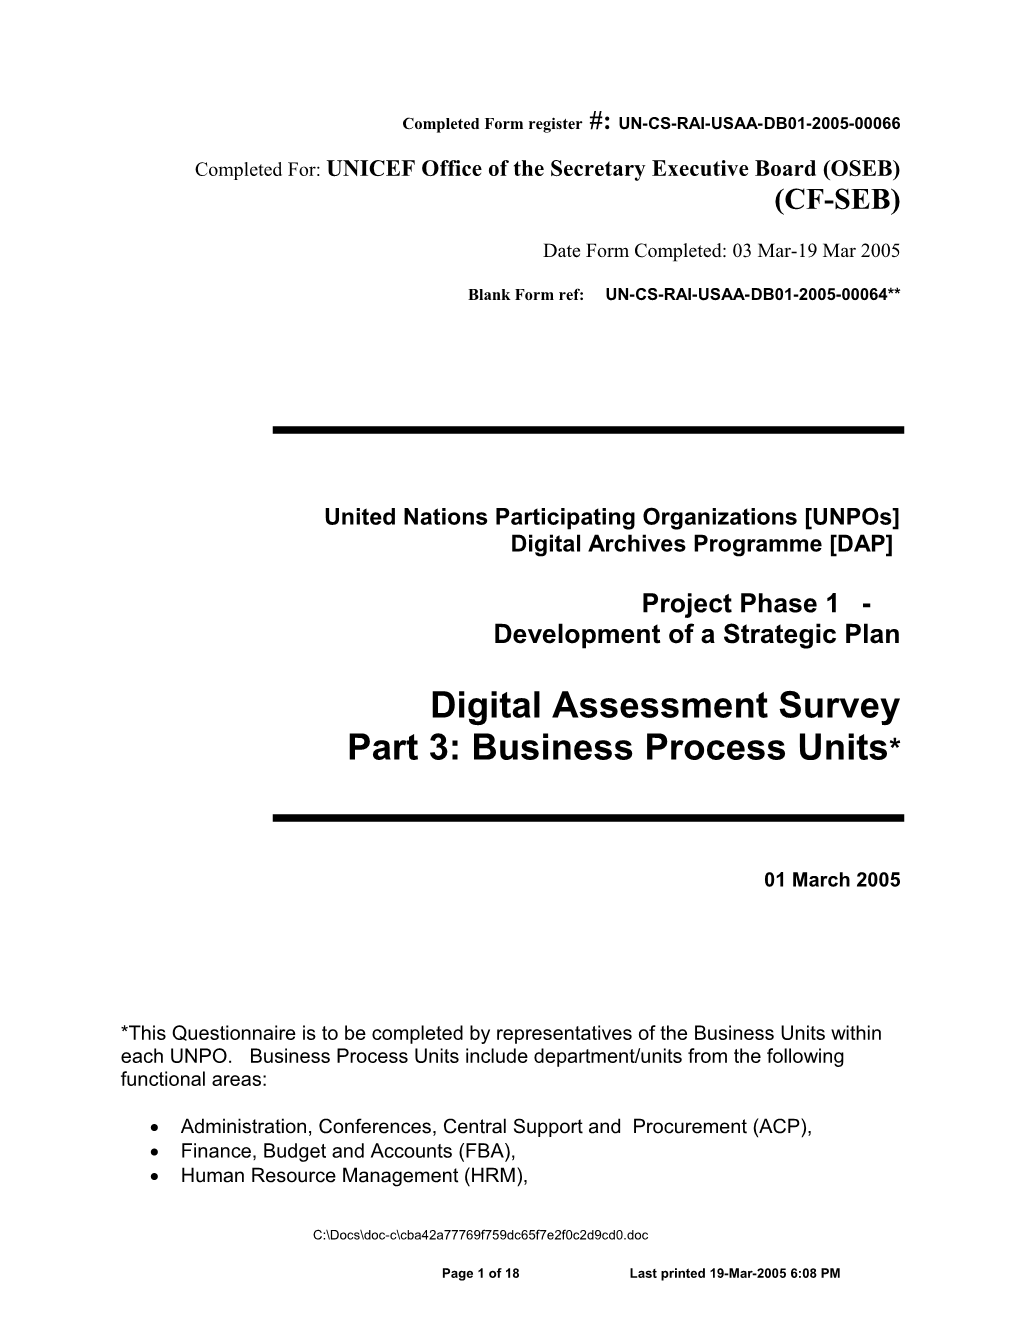 Completed Form Register #: UN-CS-RAI-USAA-DB01-2005-00066